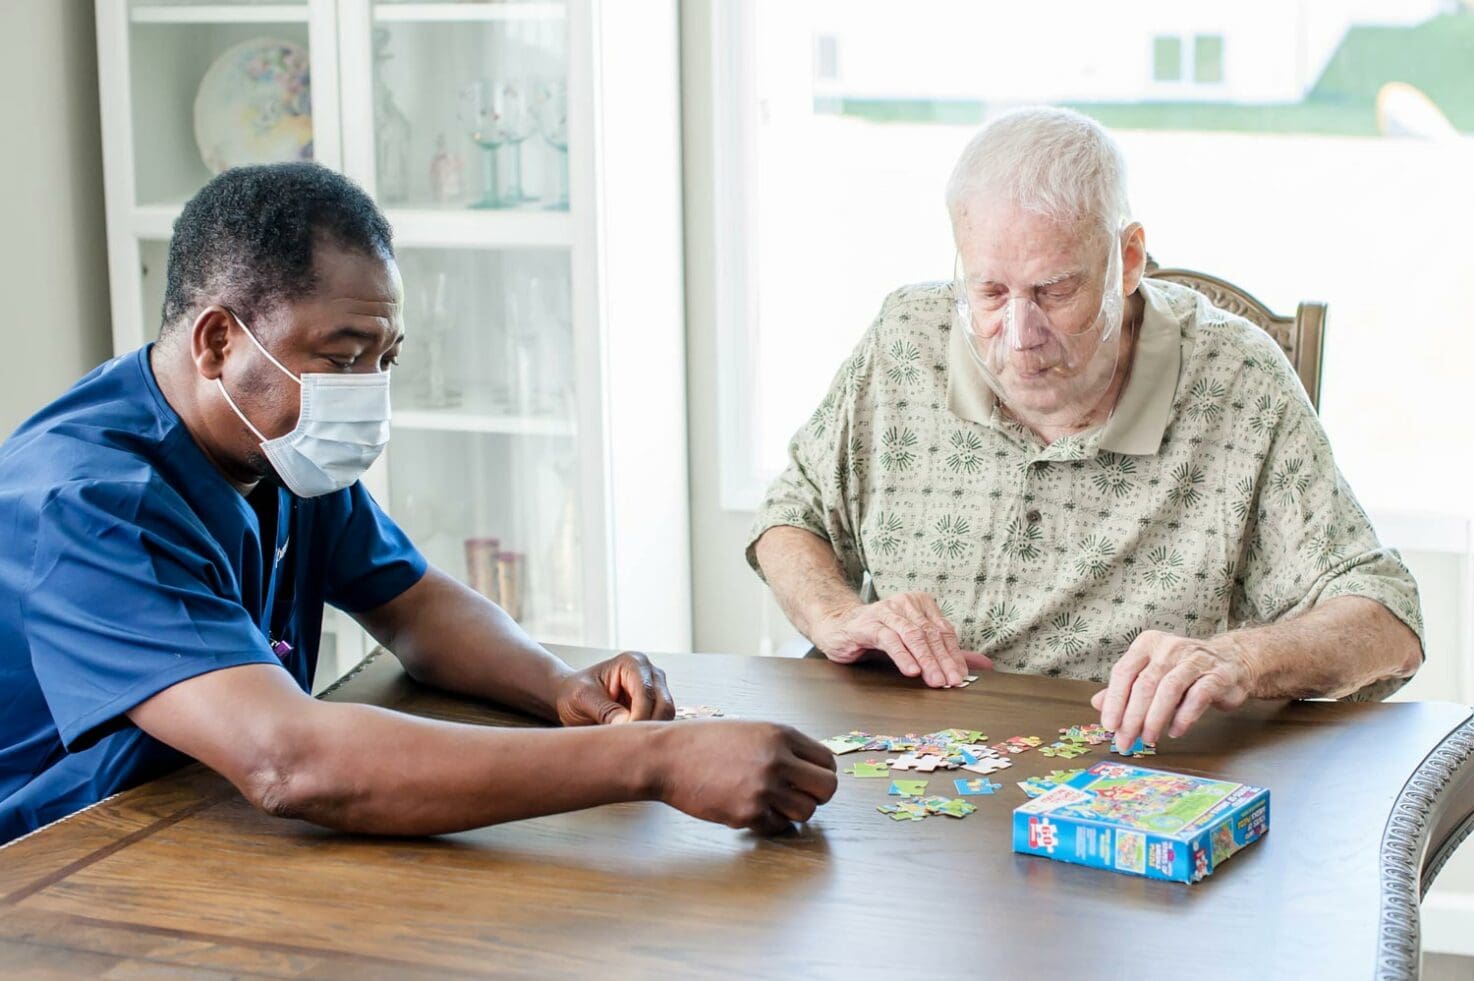 Caregiver working puzzle with senior patient